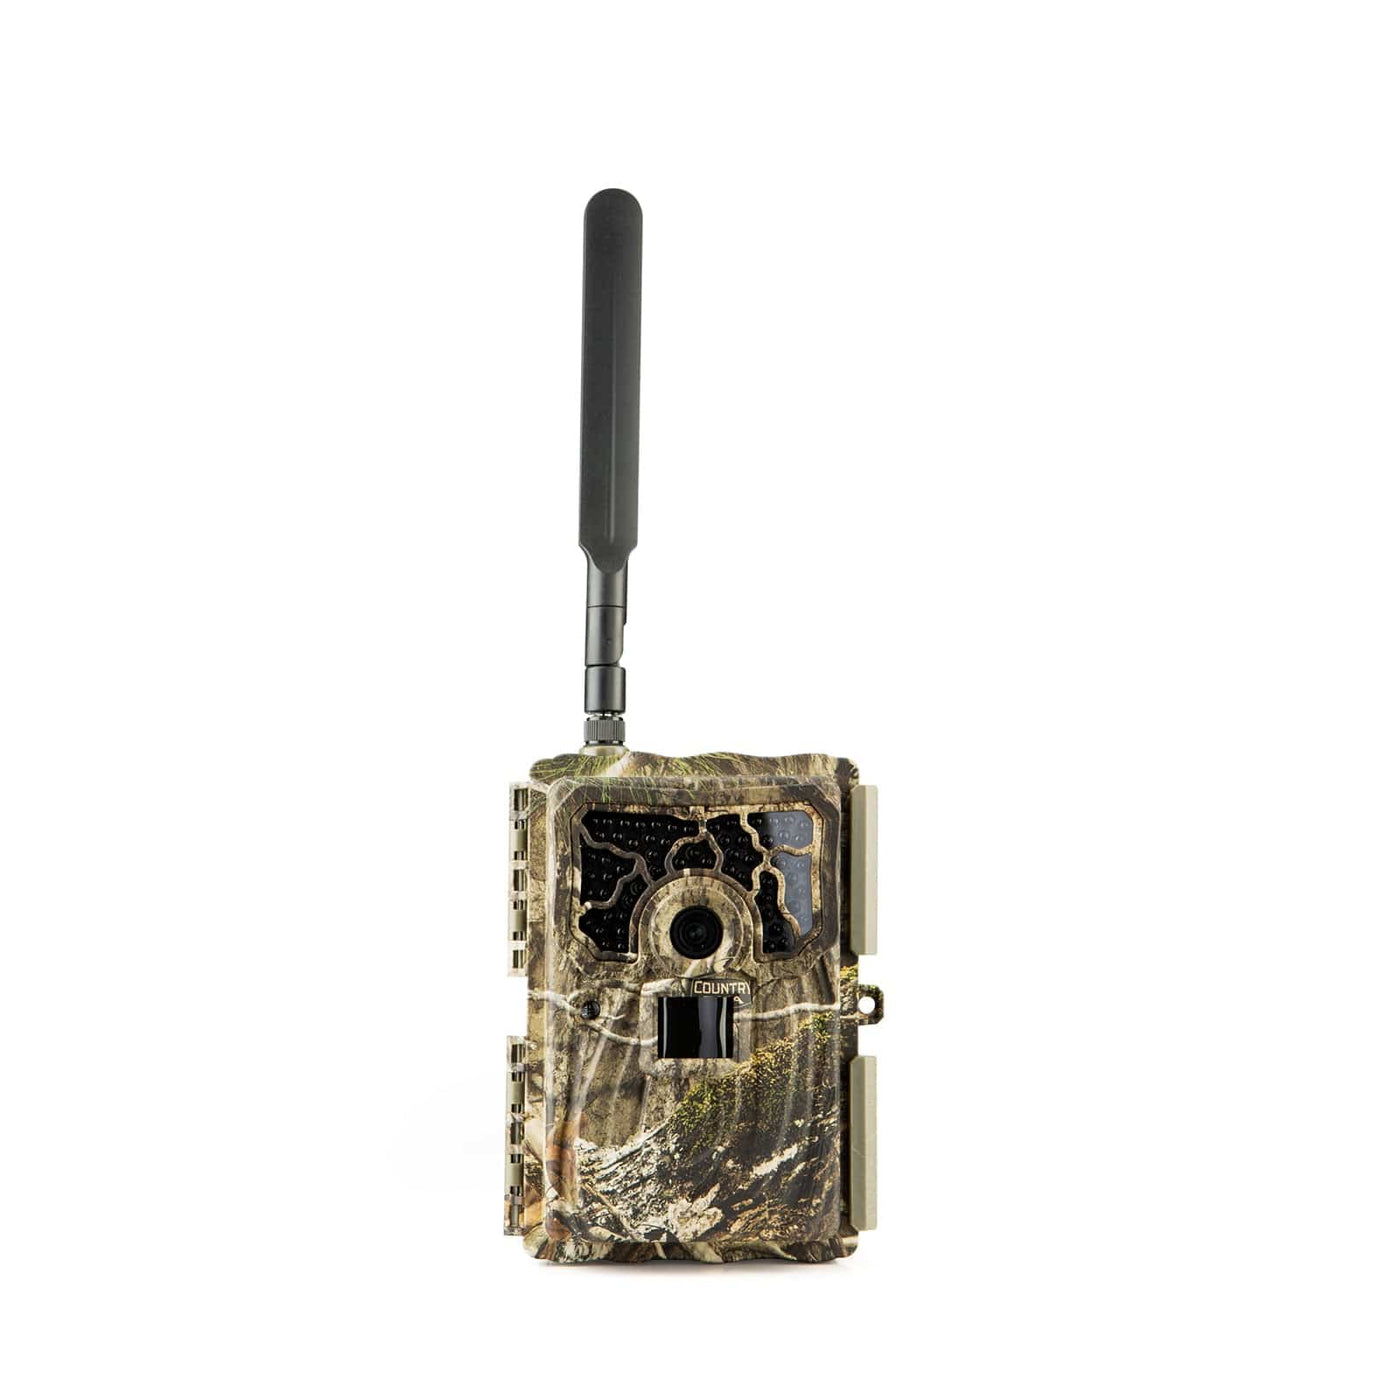 Covert Scouting Cameras Covert Scouting Cameras Code Black Select Universal Hunting